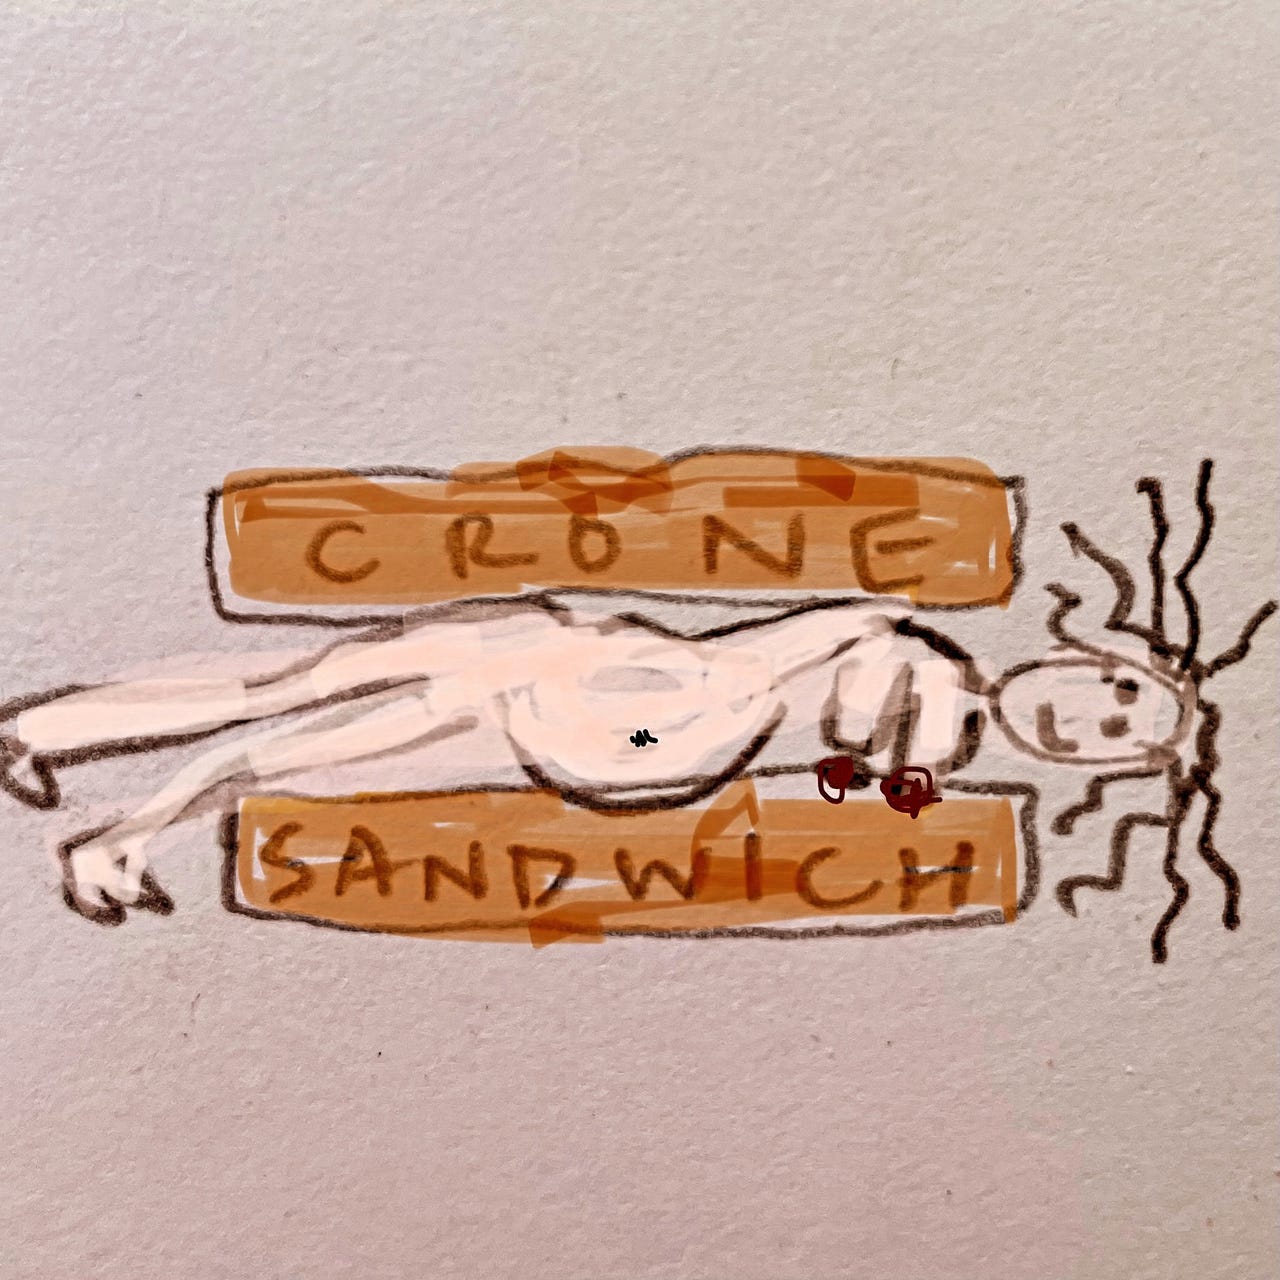 Crone Sandwich